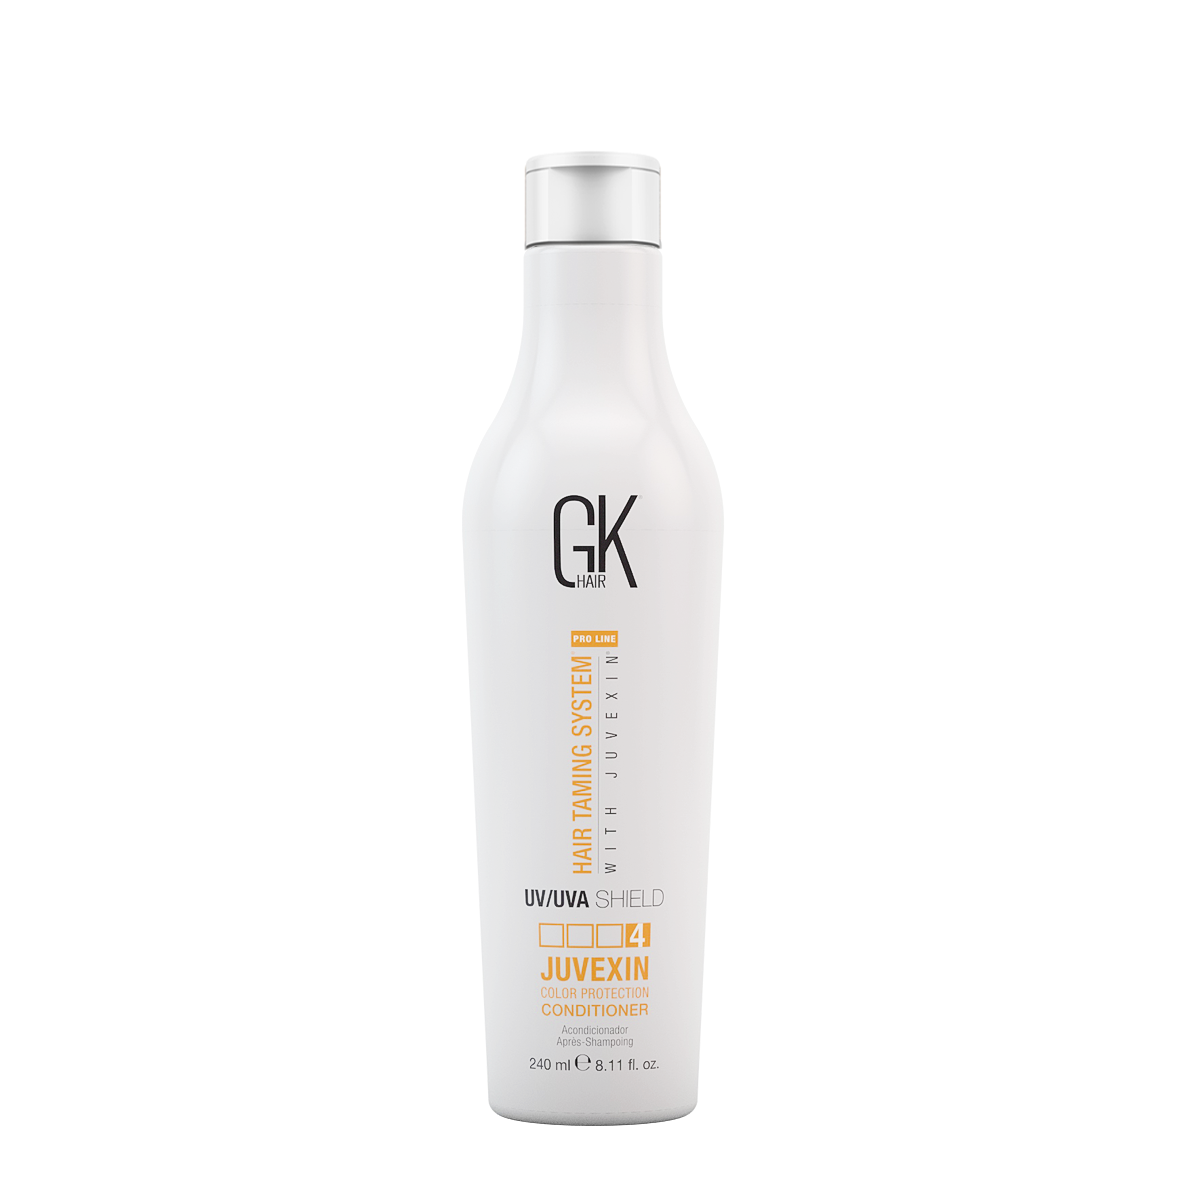 GK Hair Shield Shampoo and Conditioner | UV/UVA